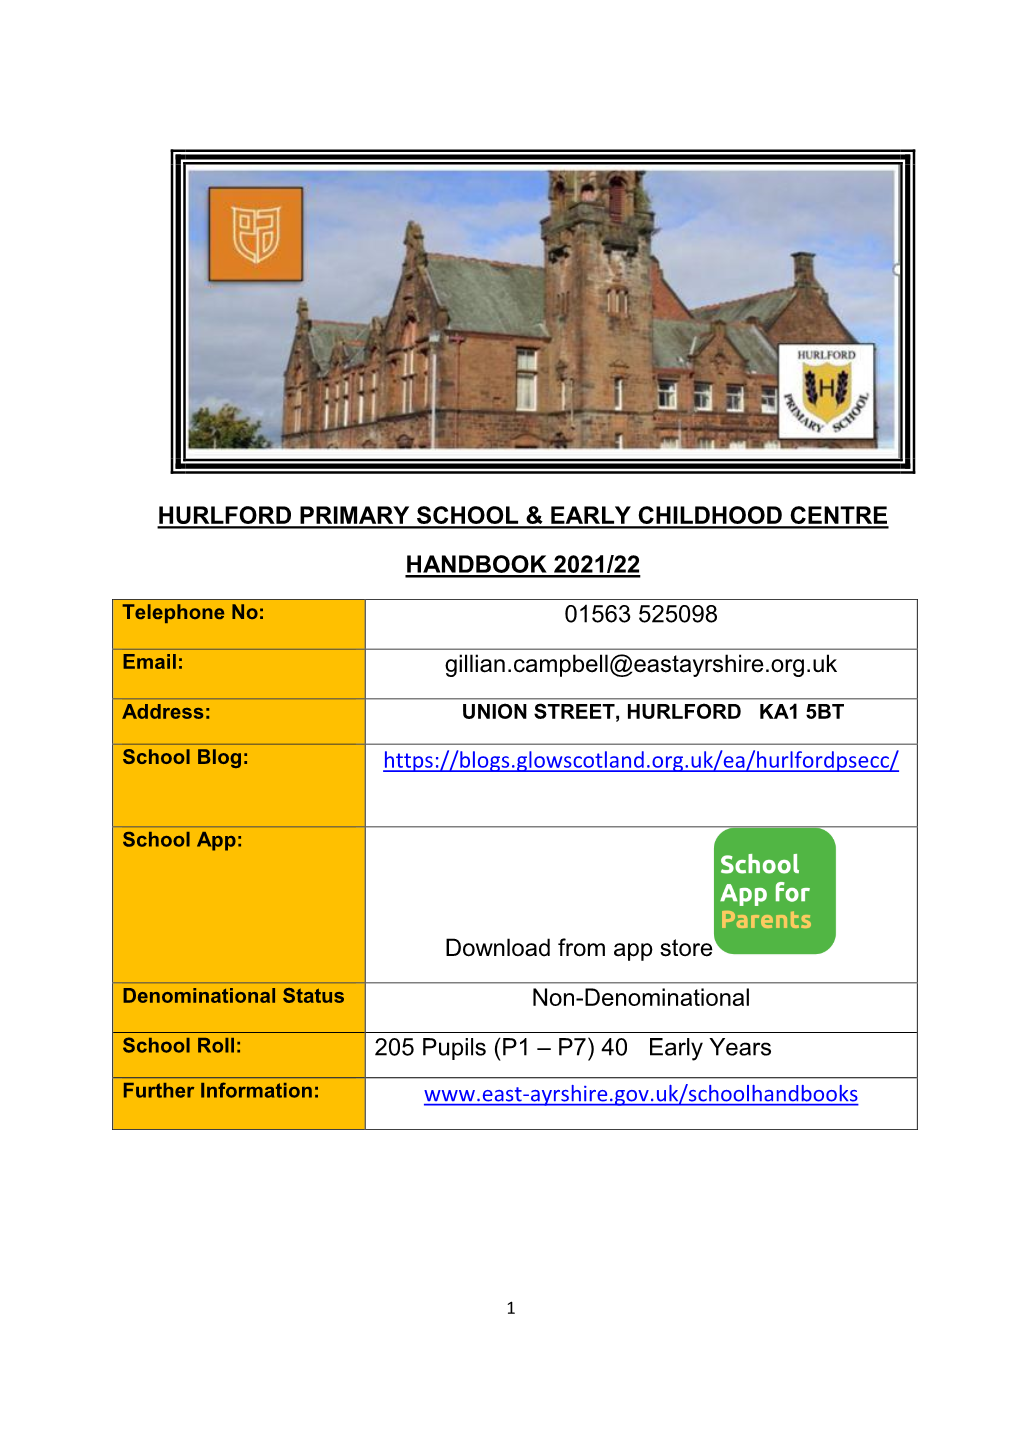 Hurlford Primary School & Early Childhood Centre Handbook 2021/22